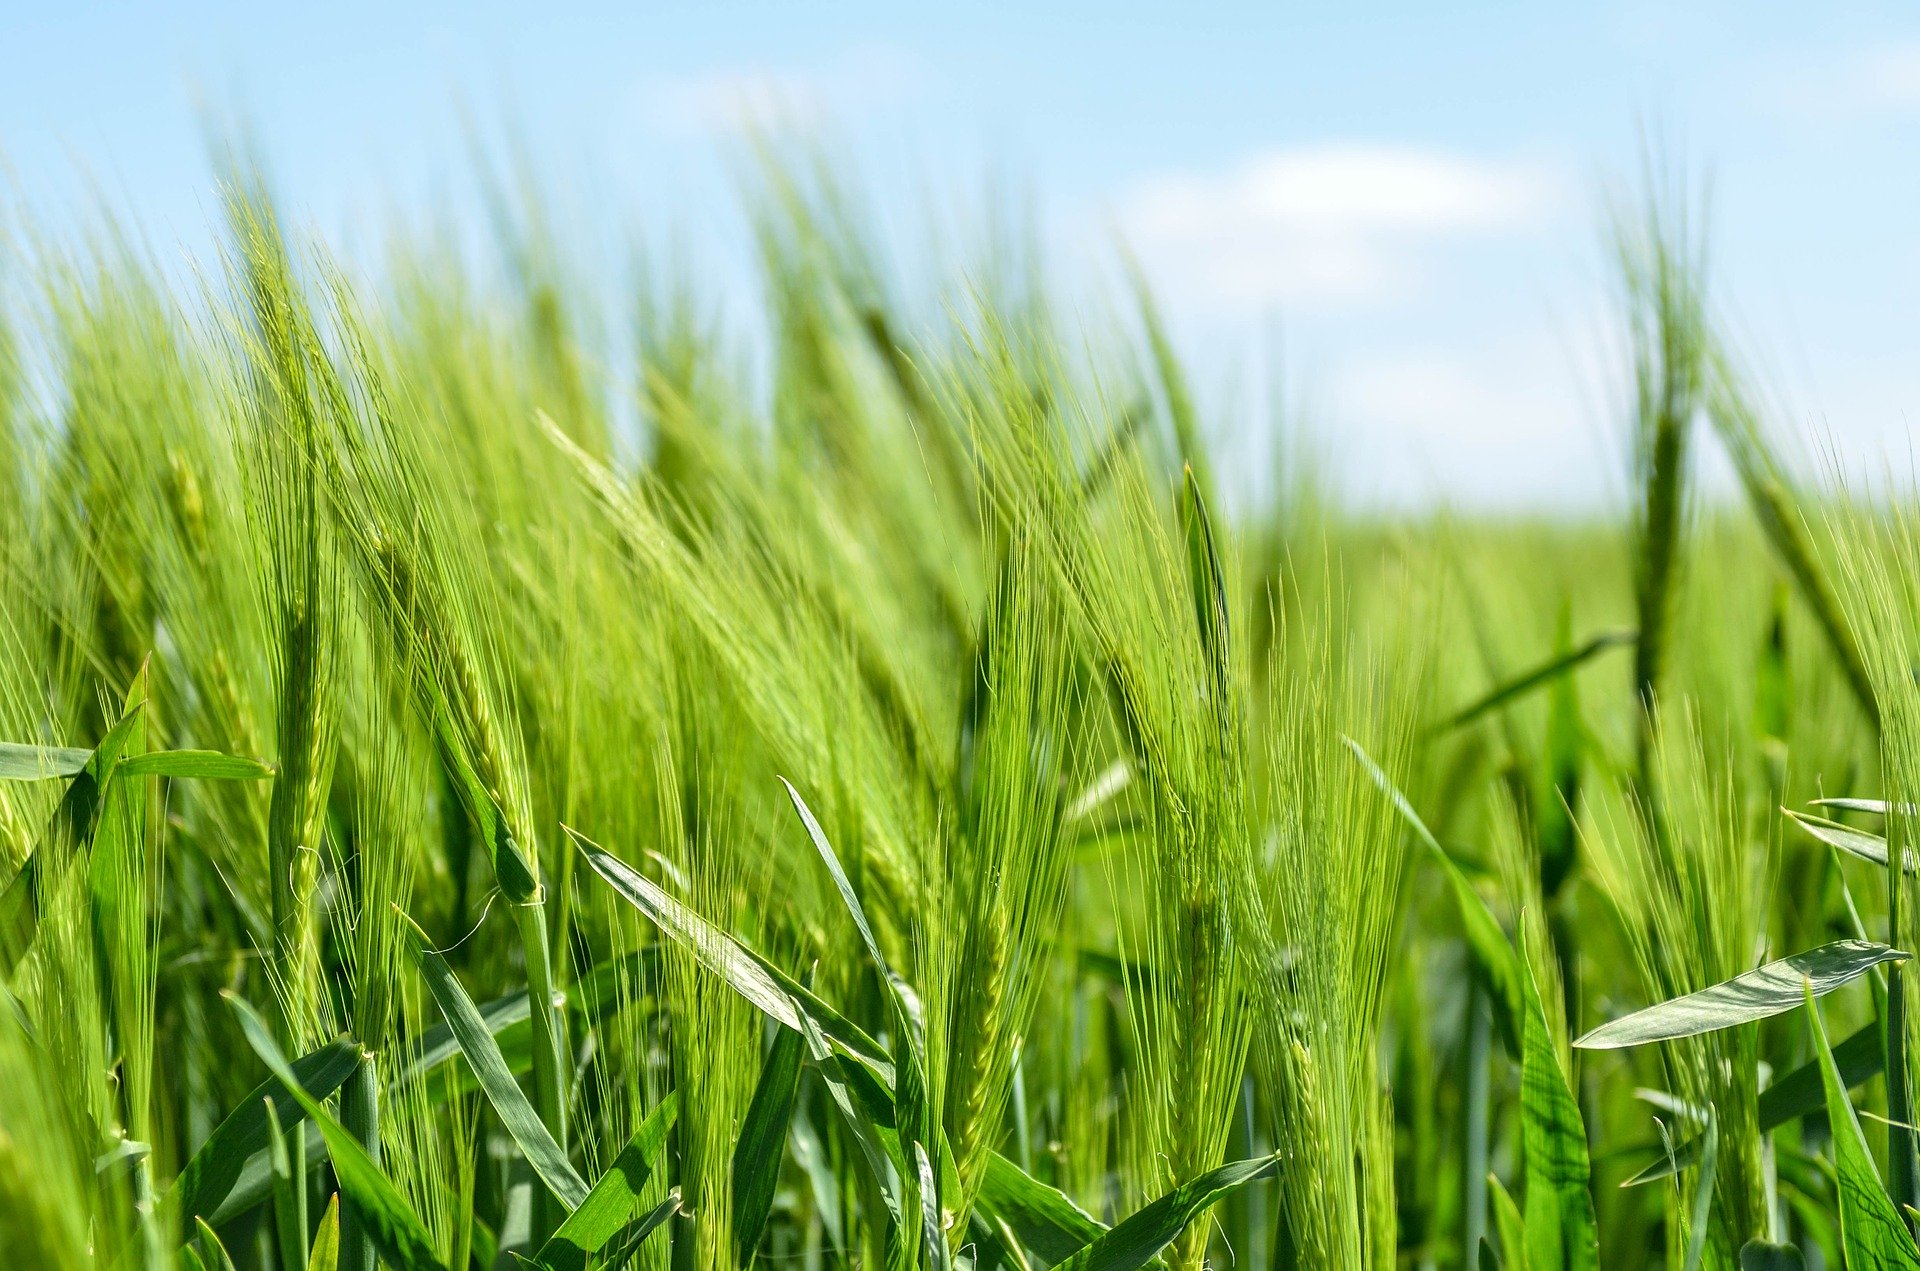 Barley field stock image from Pixabay.